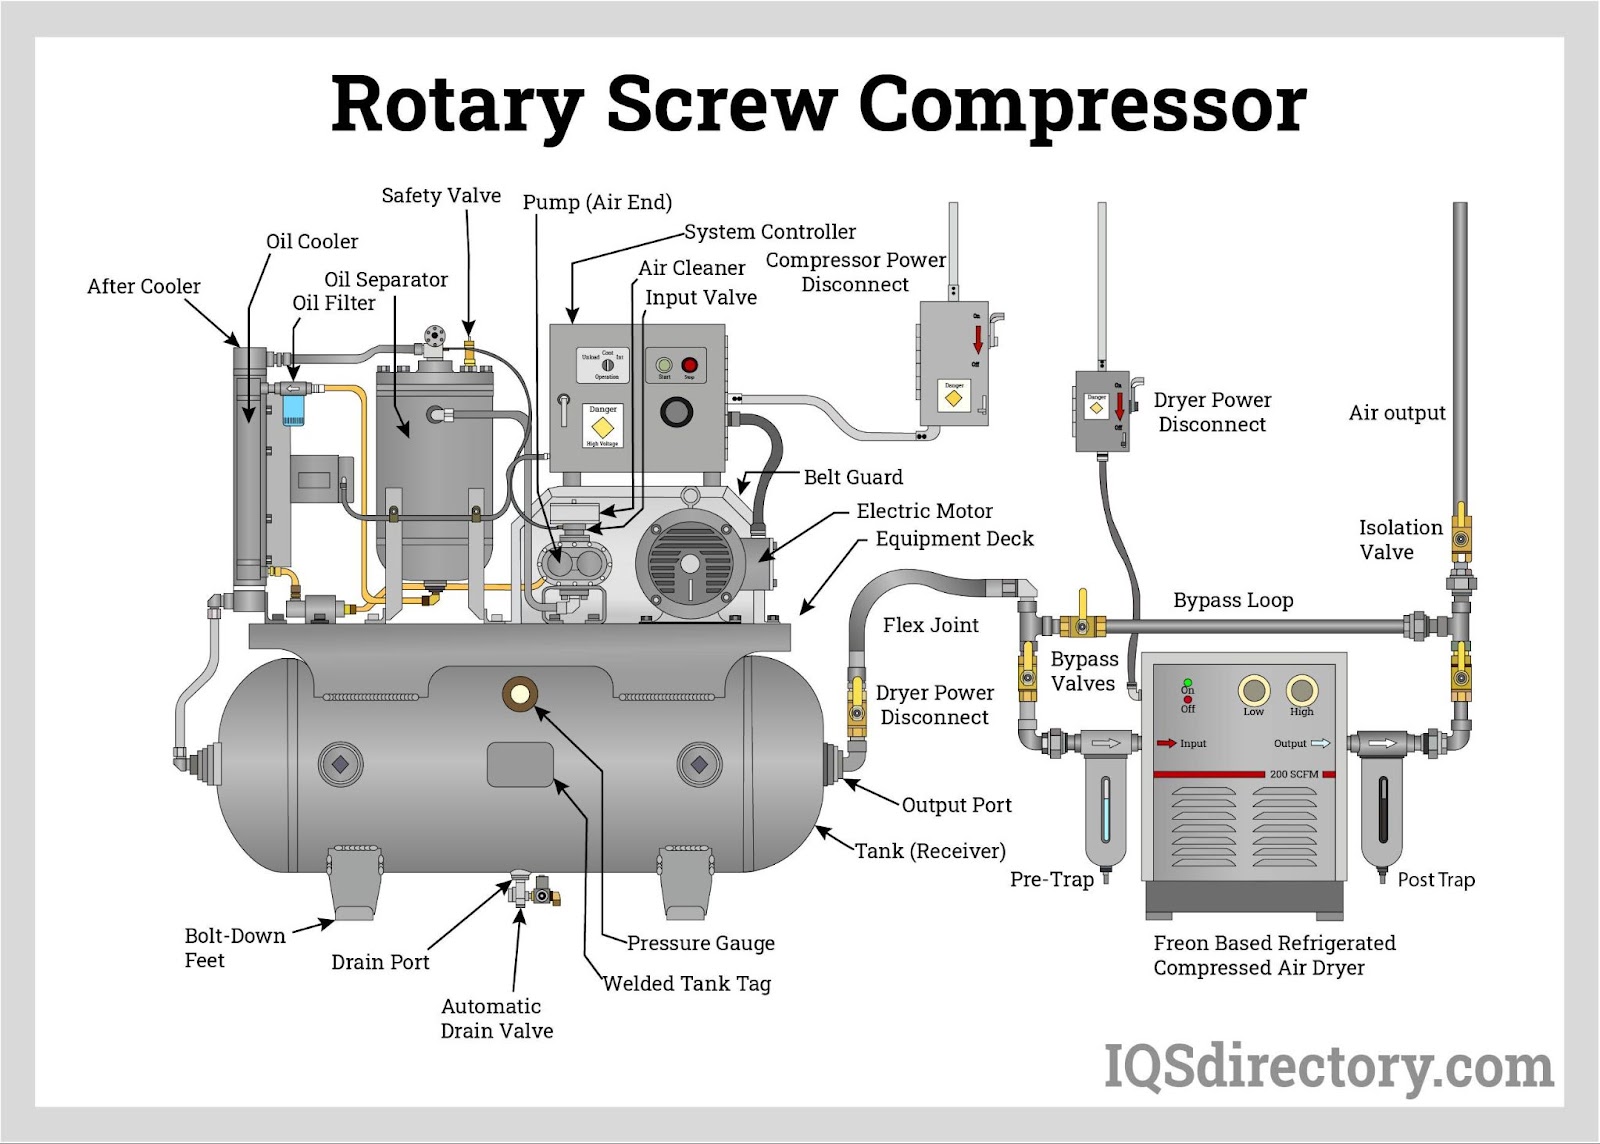 Rotary Screw Compressor